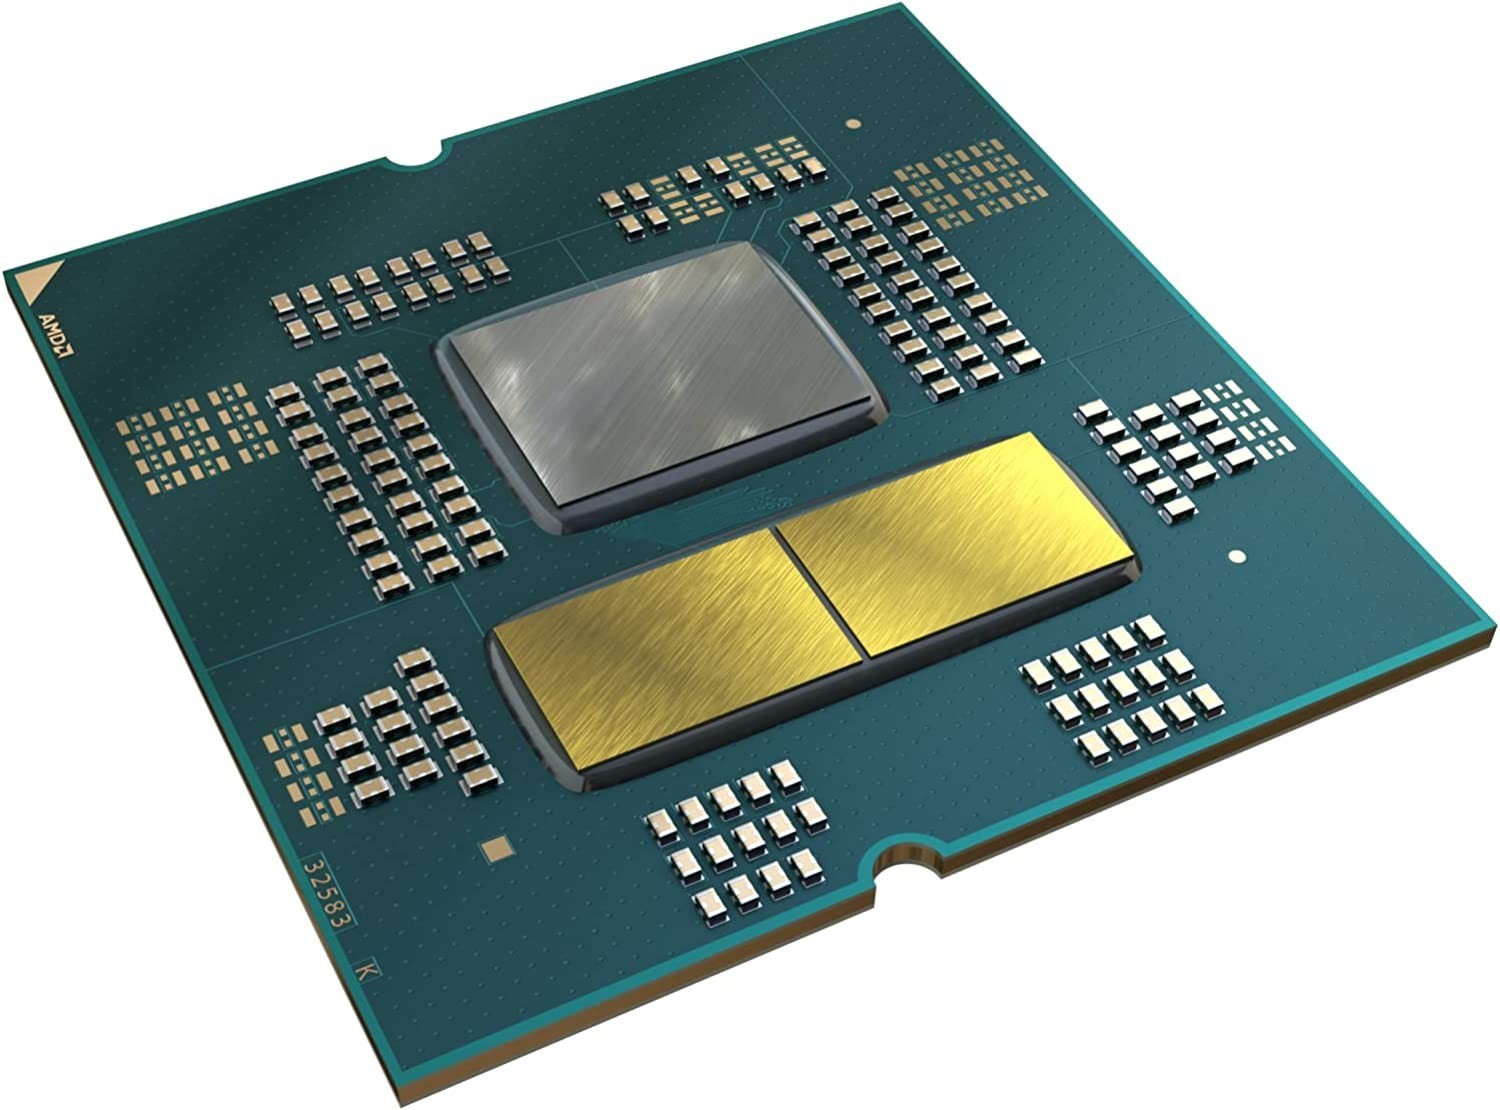 Processeur - AMD Ryzen 9 7950X (4.5 GHz / 5.7 GHz)